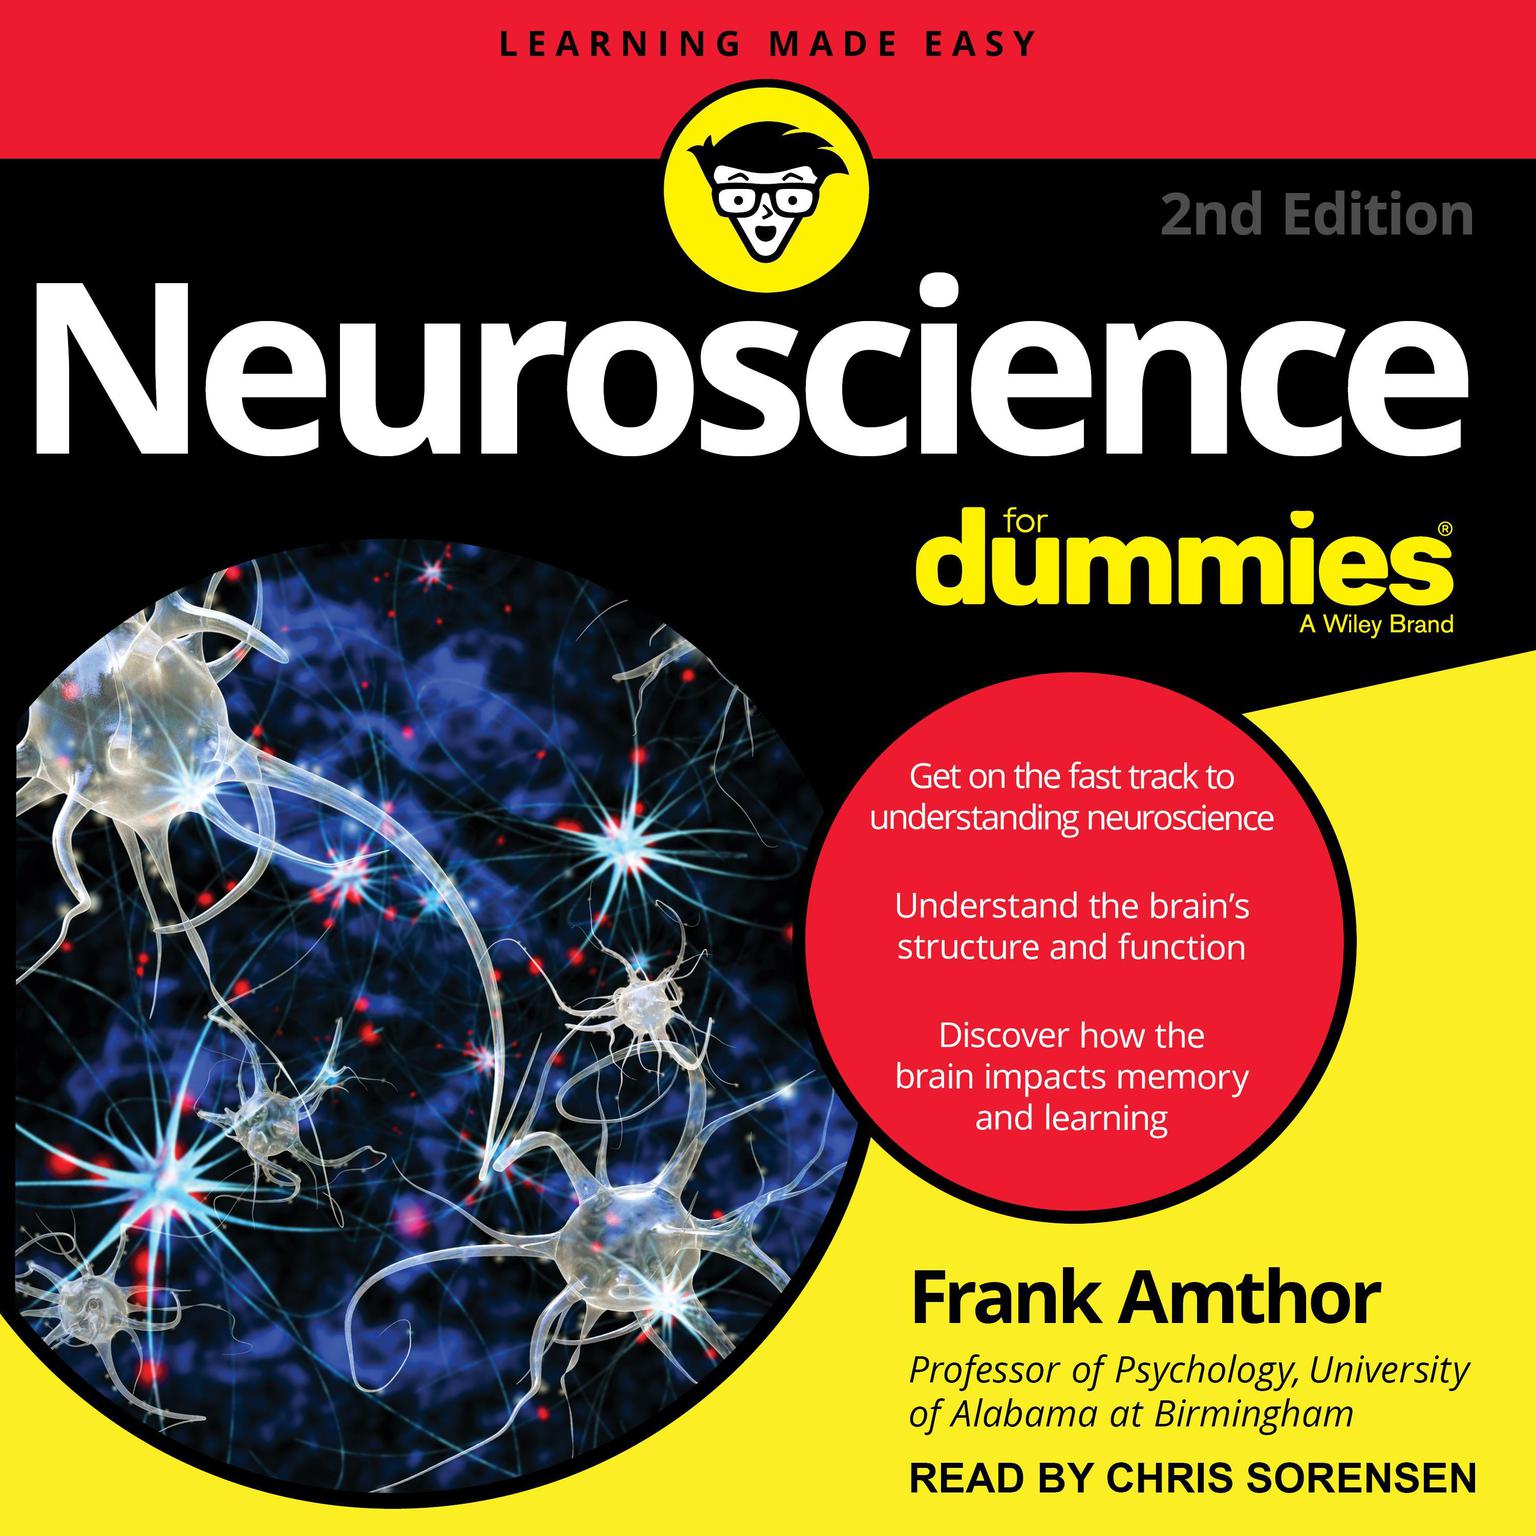 Neuroscience For Dummies: 2nd Edition Audiobook, by Frank Amthor